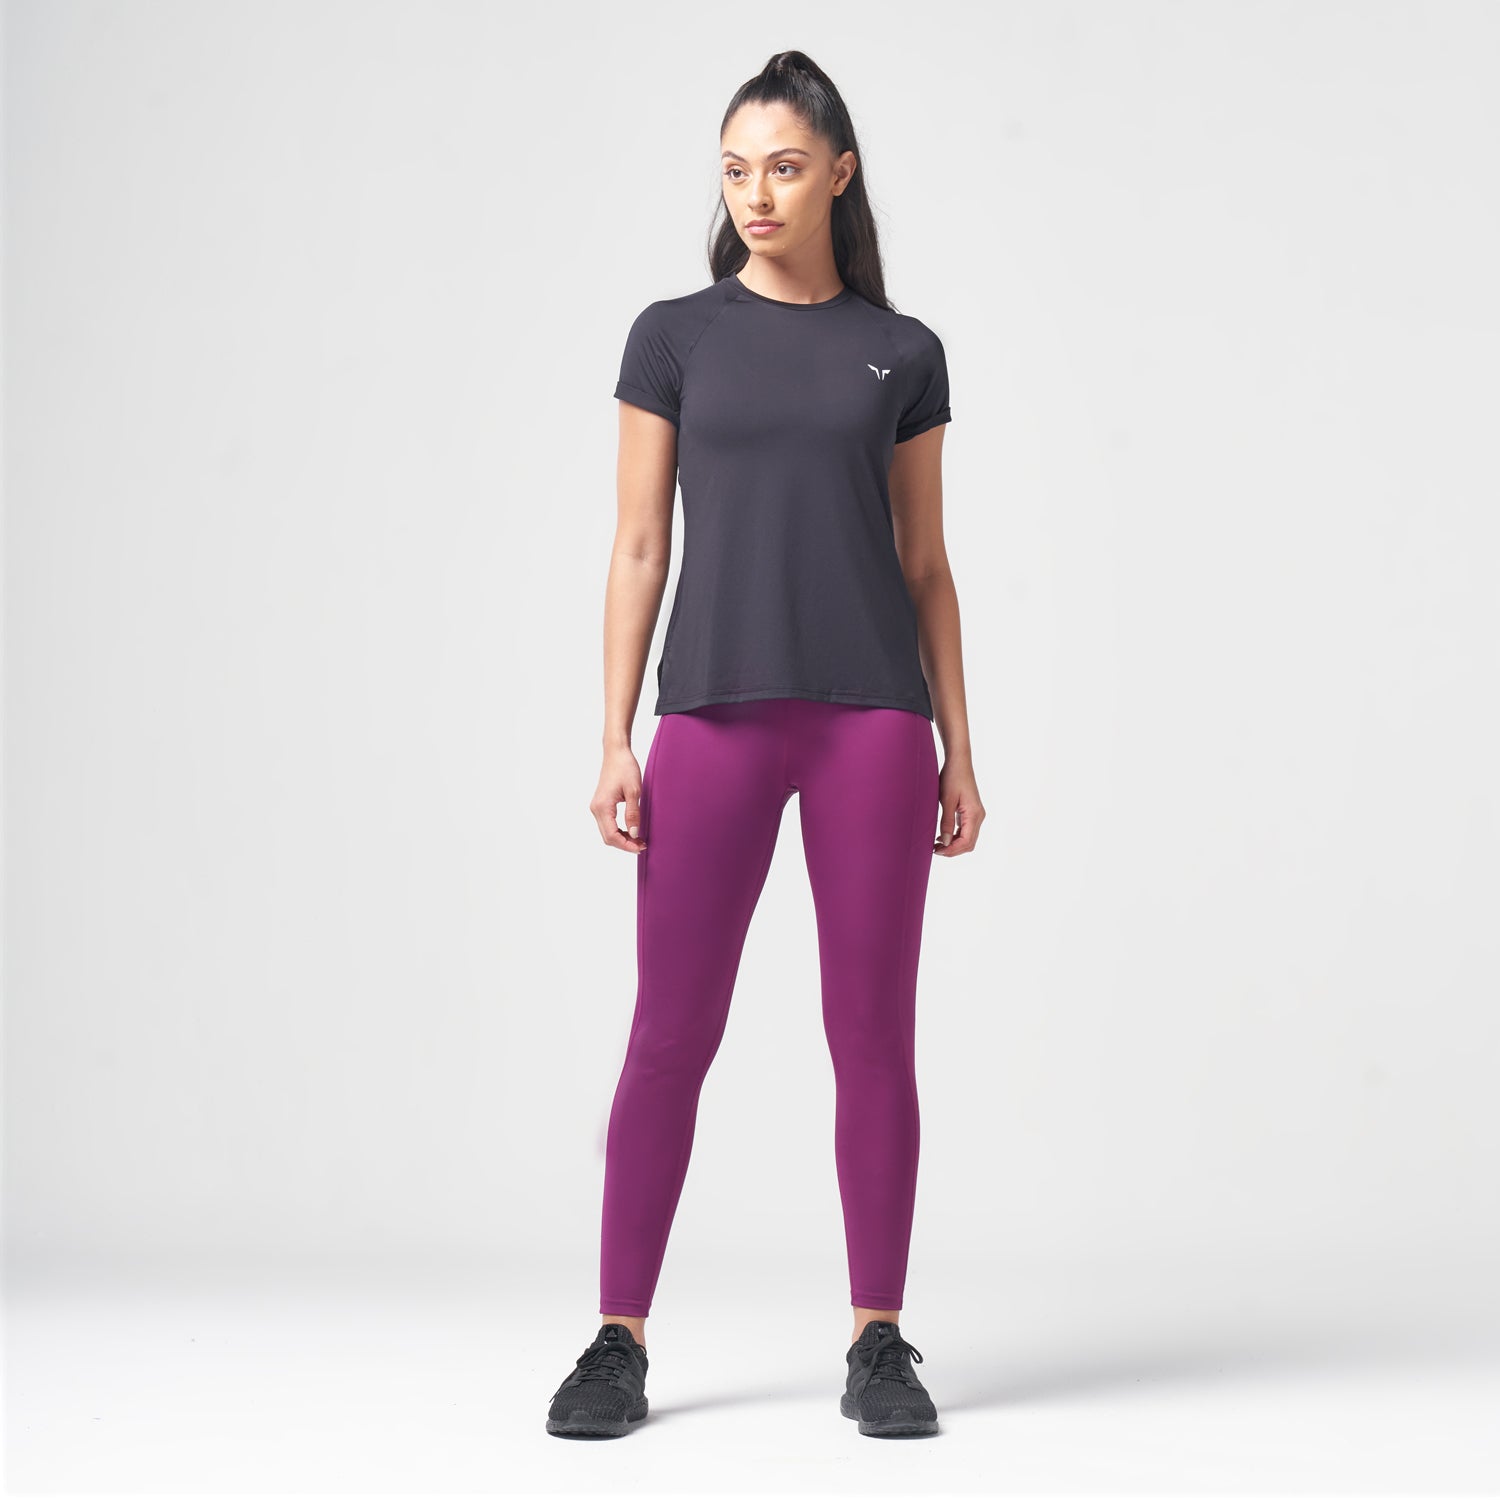 squatwolf-gym-wear-essential-weightless-tee-black-workout-tee-for-women